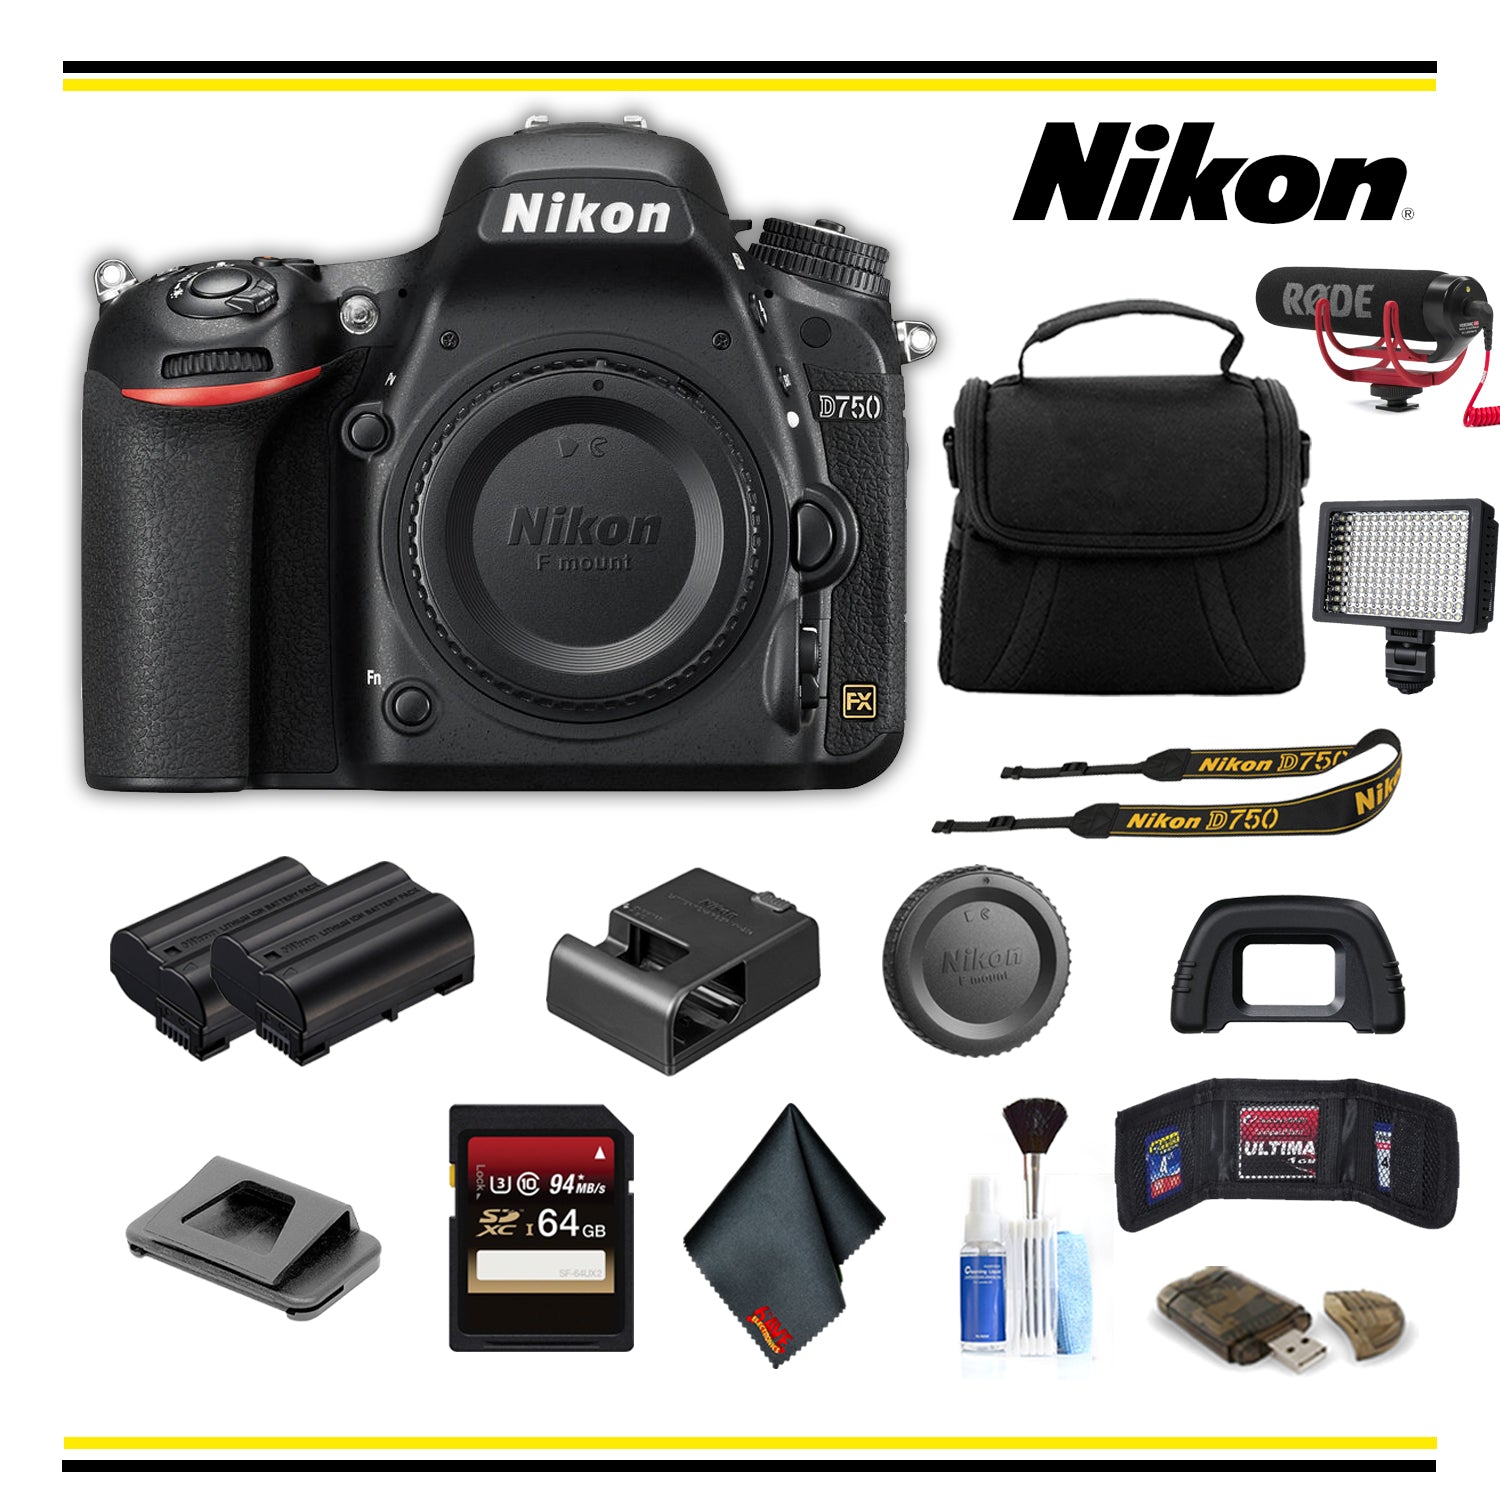 Nikon D750 DSLR Camera (1543 ) Advanced Bundle W/ Bag, Extra Battery, LED Light, Mic, and More- (International Model )